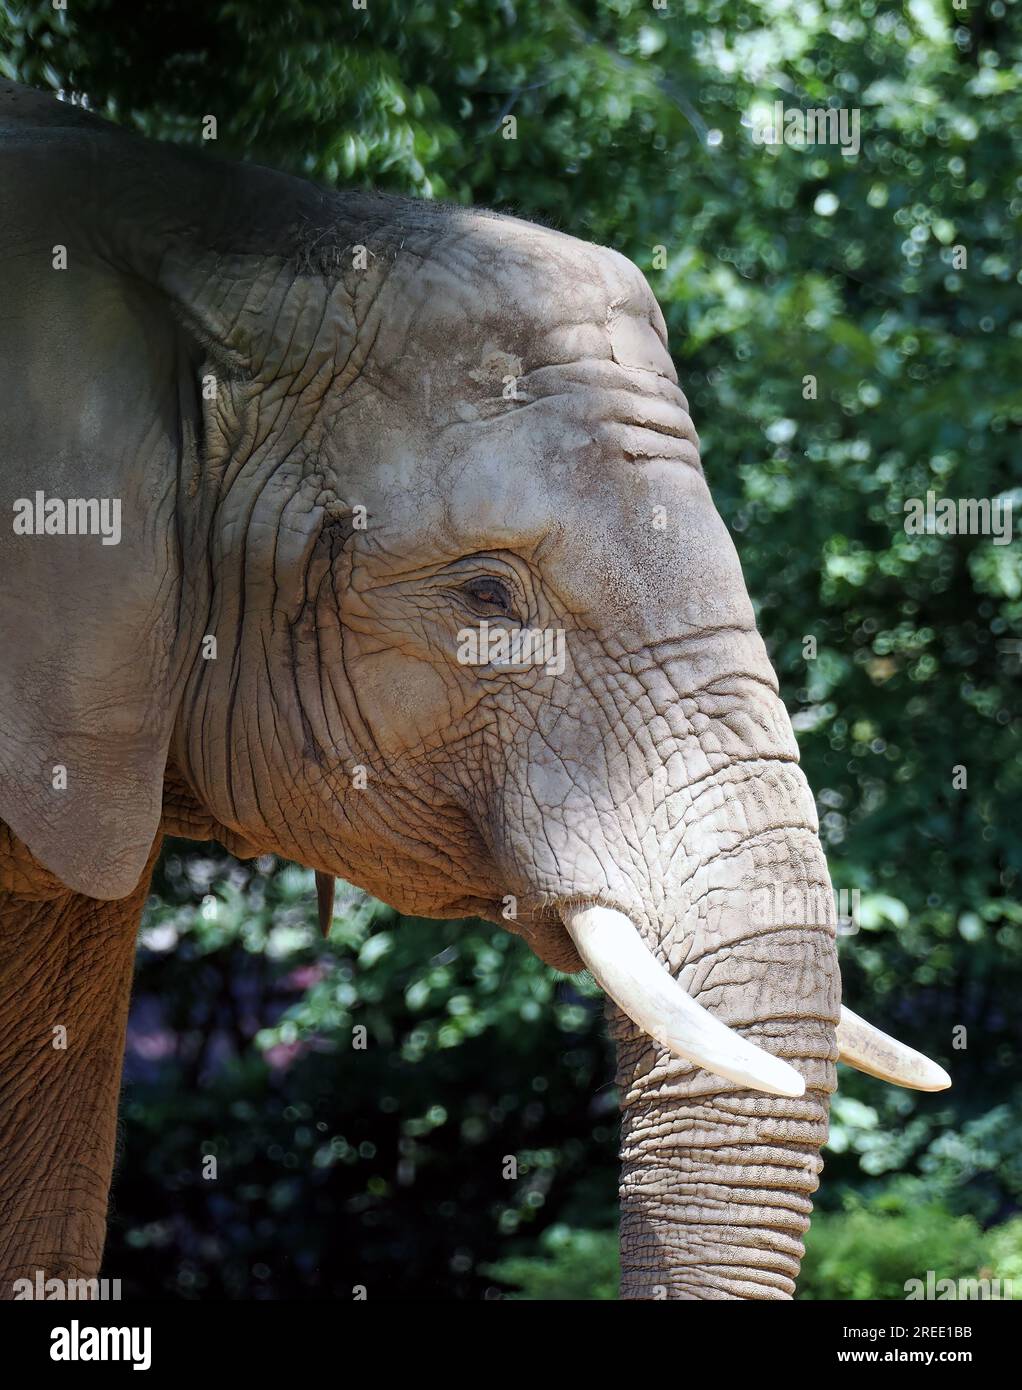 Afrikanischer Savannenelefant, afrikanischer Buschelefant, Afrikanischer Elefant, Afrikanischer Steppenelefant, Loxodonta africana Stockfoto